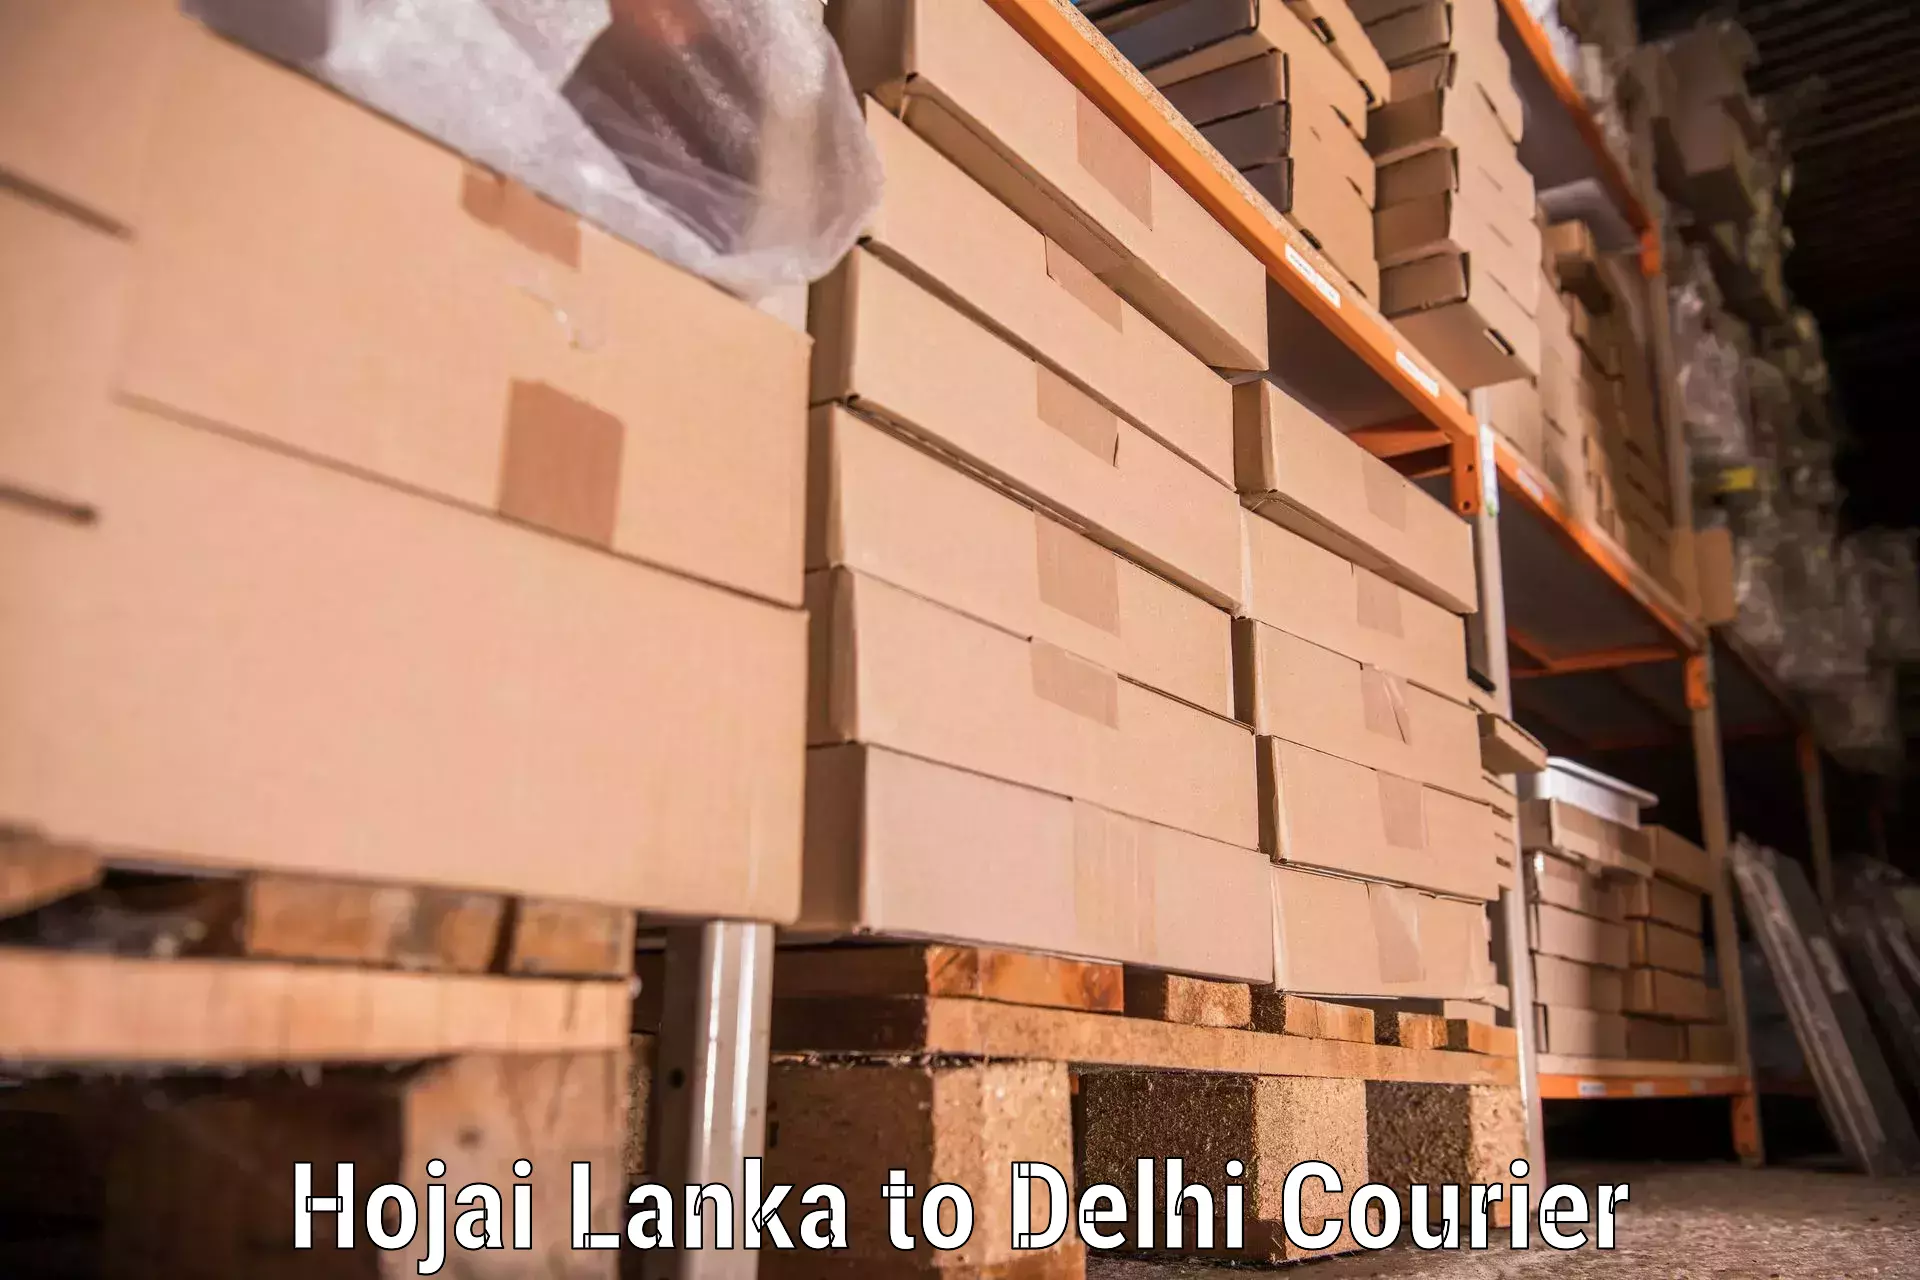 Furniture transport company Hojai Lanka to East Delhi